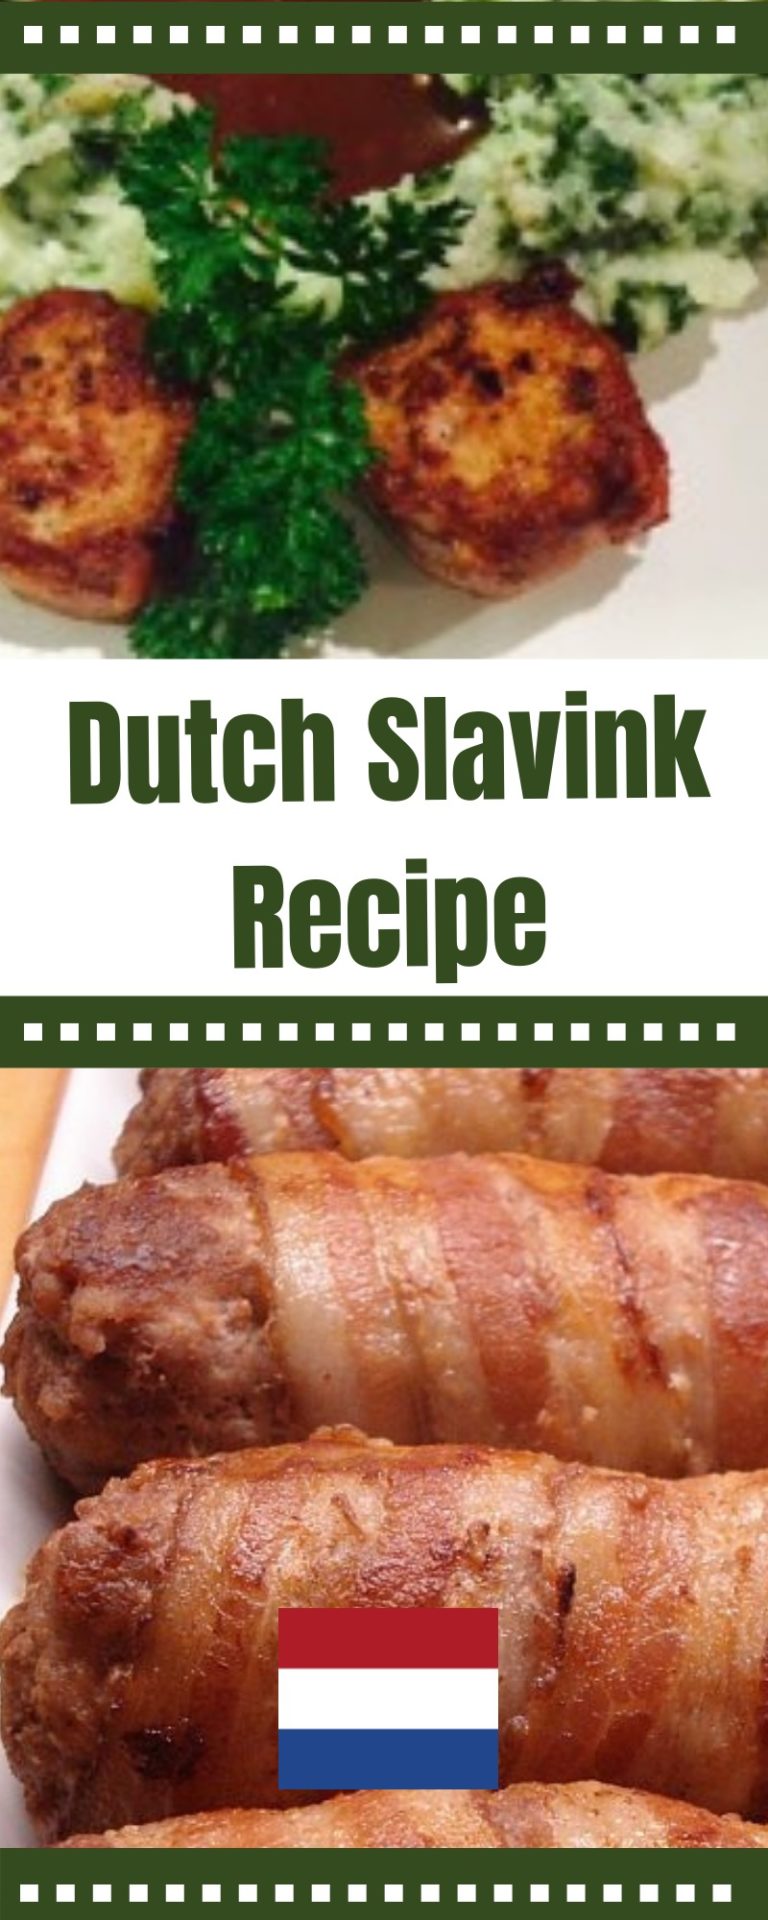 Traditional Dutch Slavink Recipe | What are Slavinken?